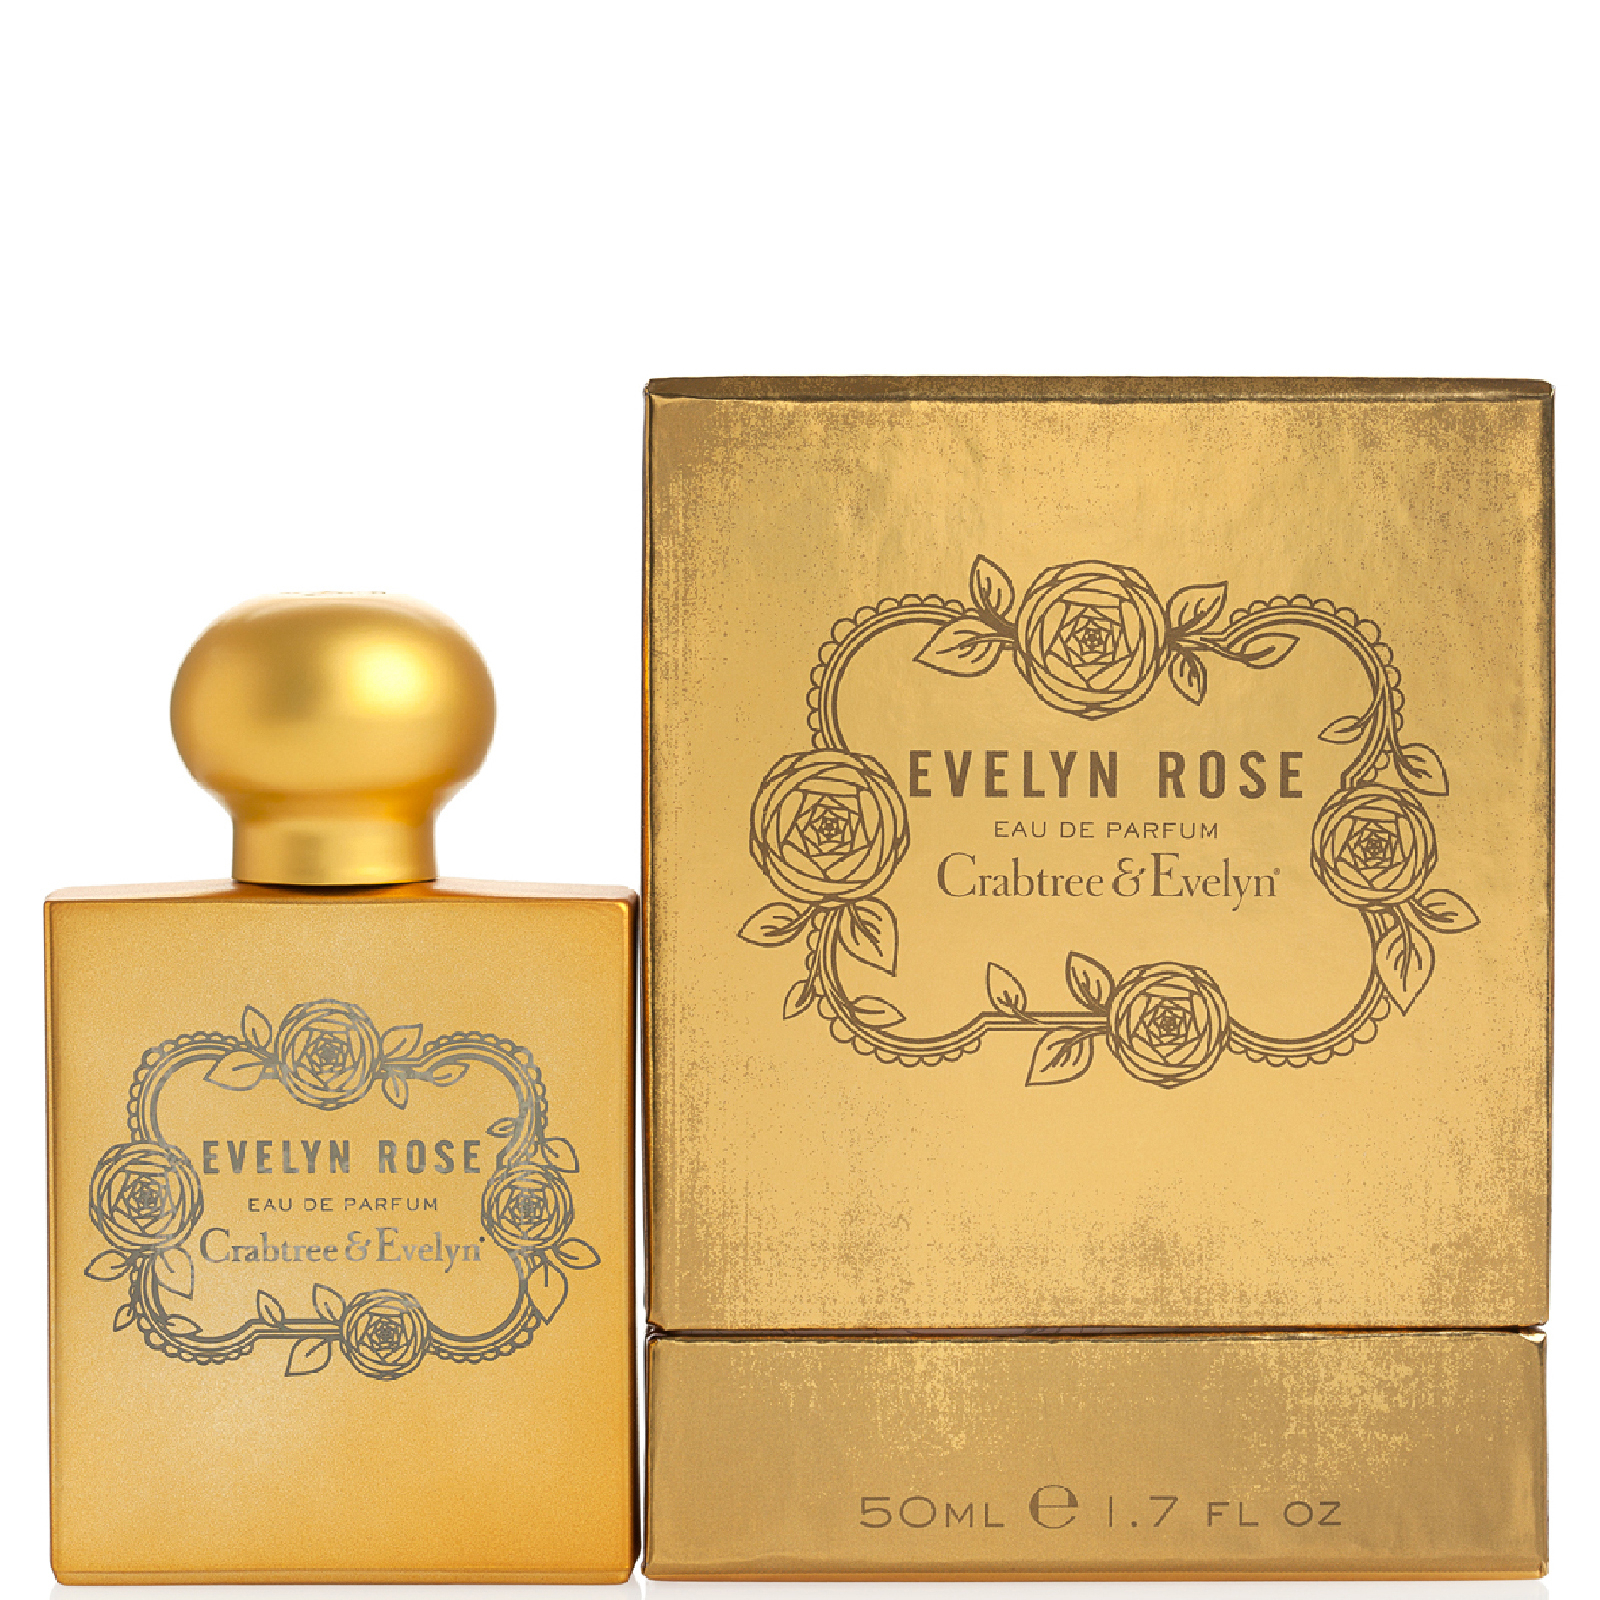 Evelyn Rose Eau de Parfum de Crabtree & Evelyn 50 ml